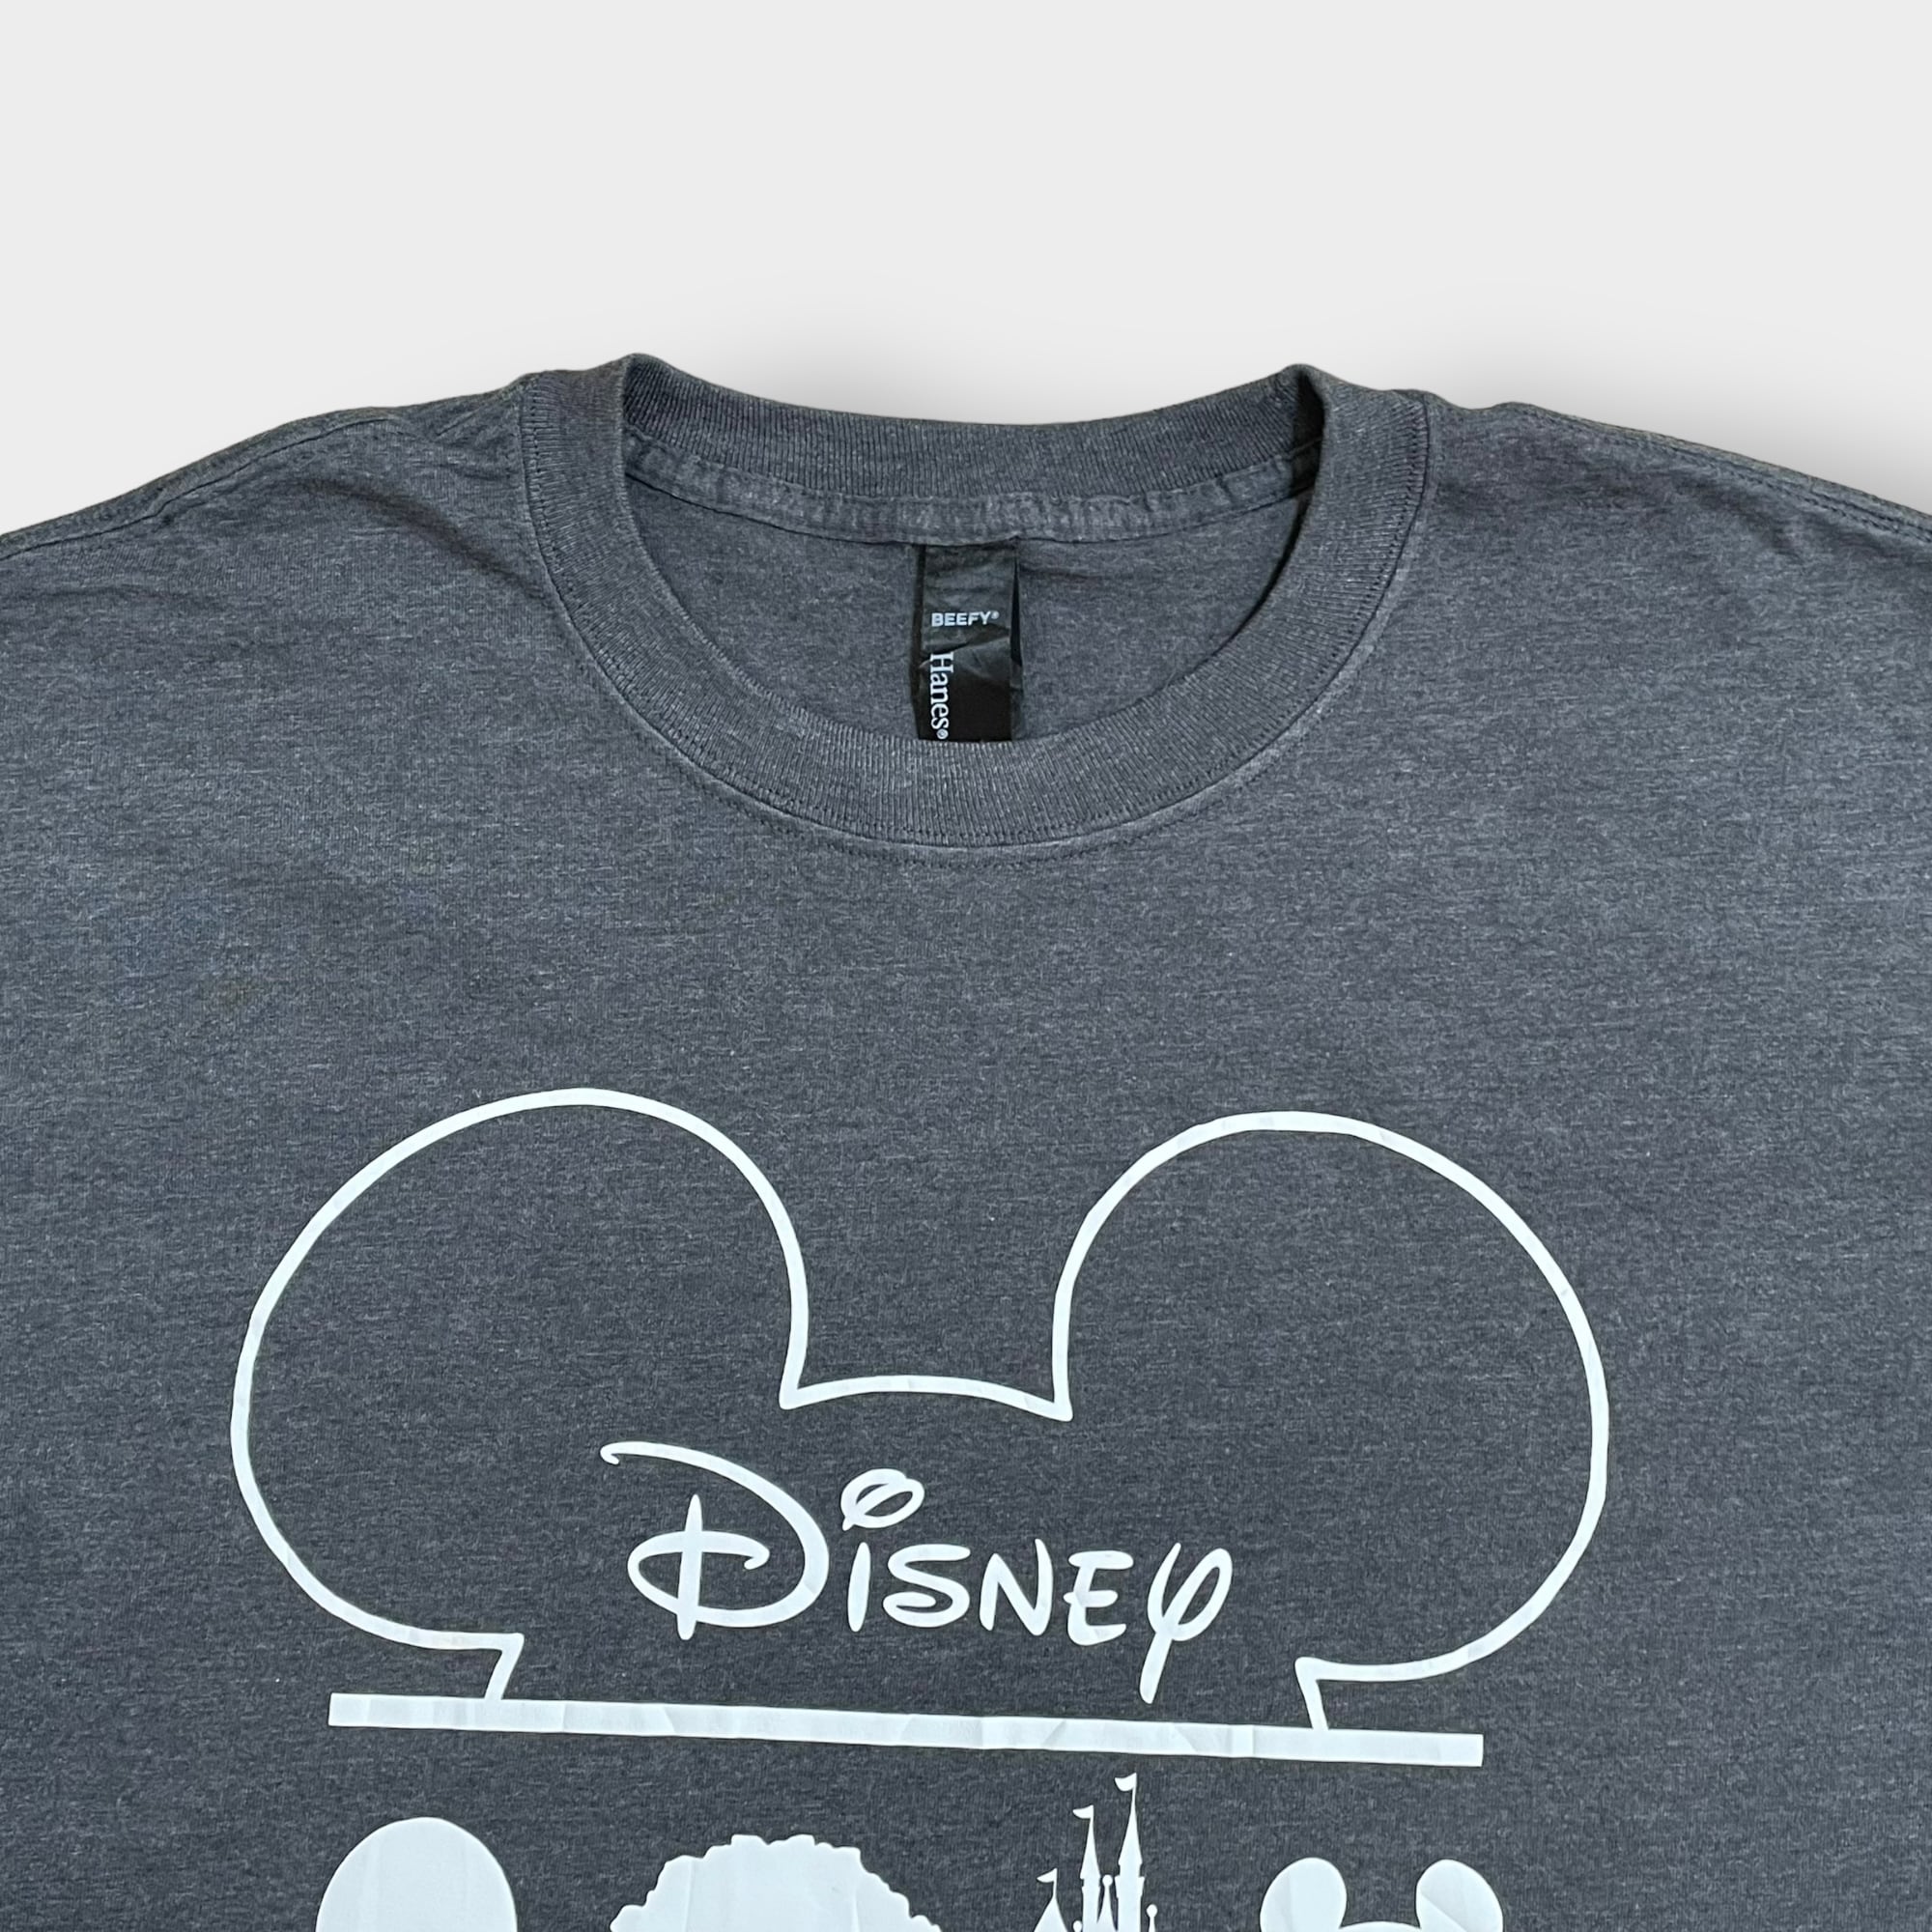 HANES】Disney Family Vacation ロゴ プリント Tシャツ 2XL ビッグ ...